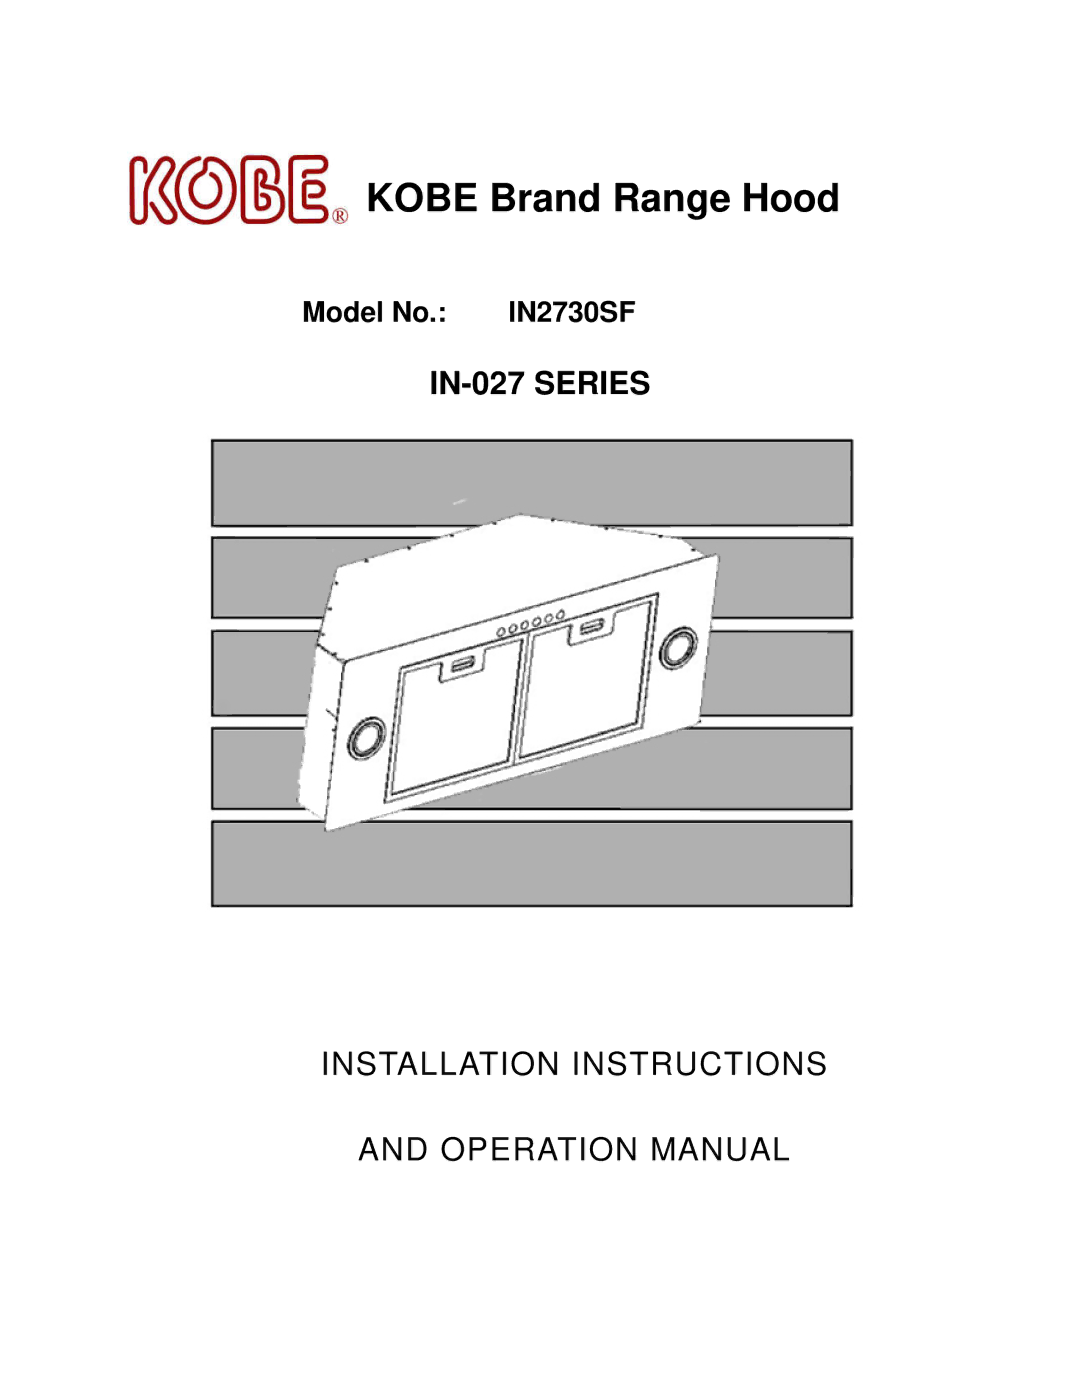 Kobe Range Hoods IN2730SF installation instructions Kobe Brand Range Hood 